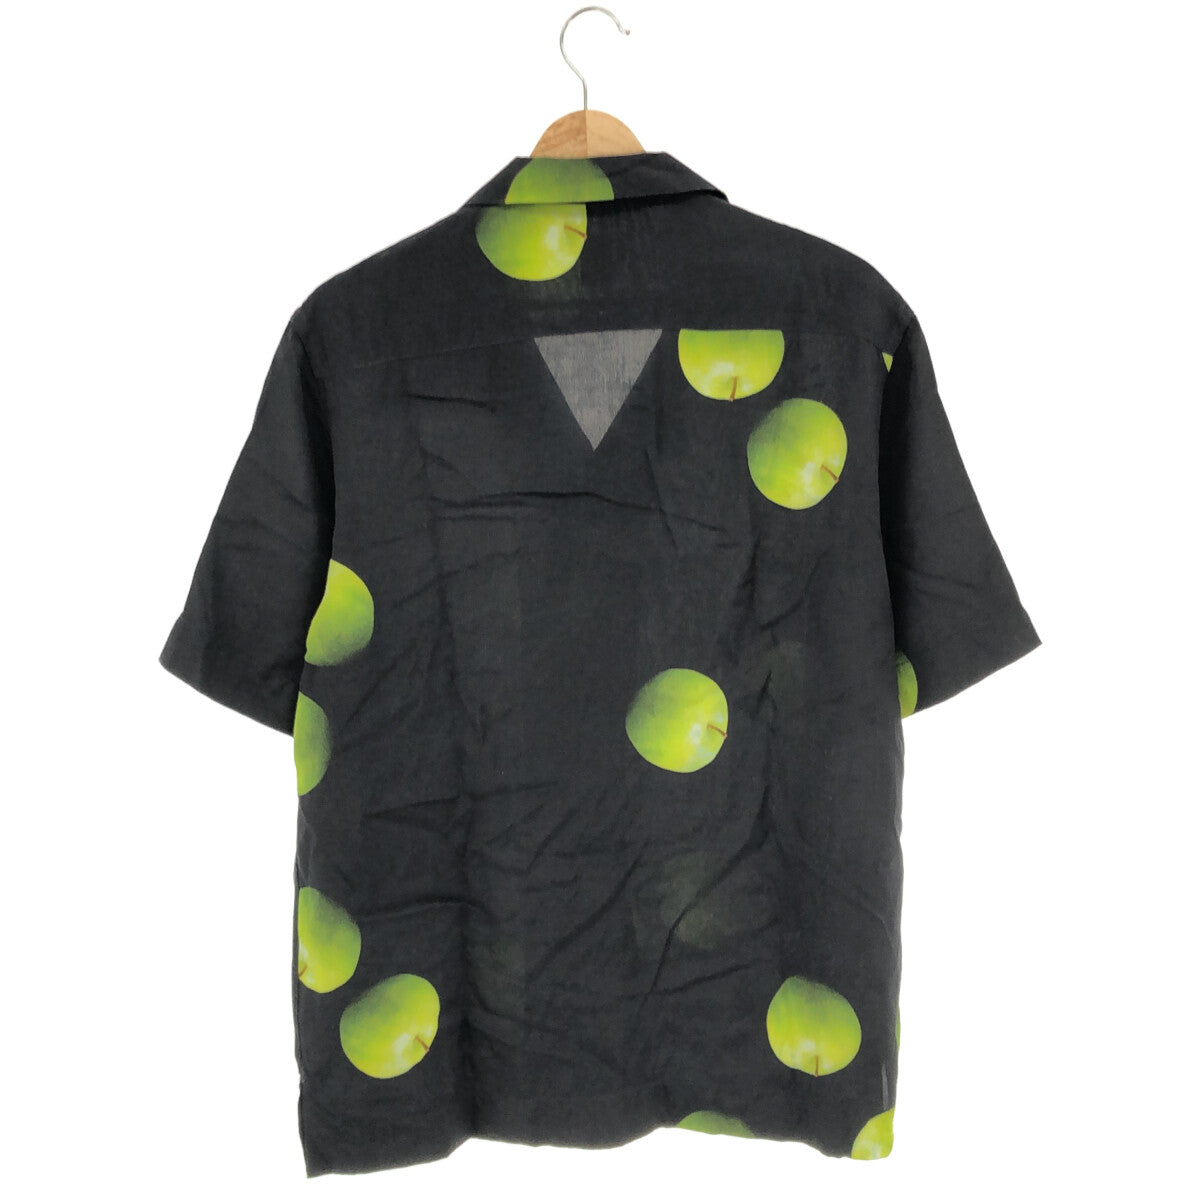 Paul Smith / ポールスミス | 50周年モデル グリーンアップル オープンカラー 半袖シャツ | S |